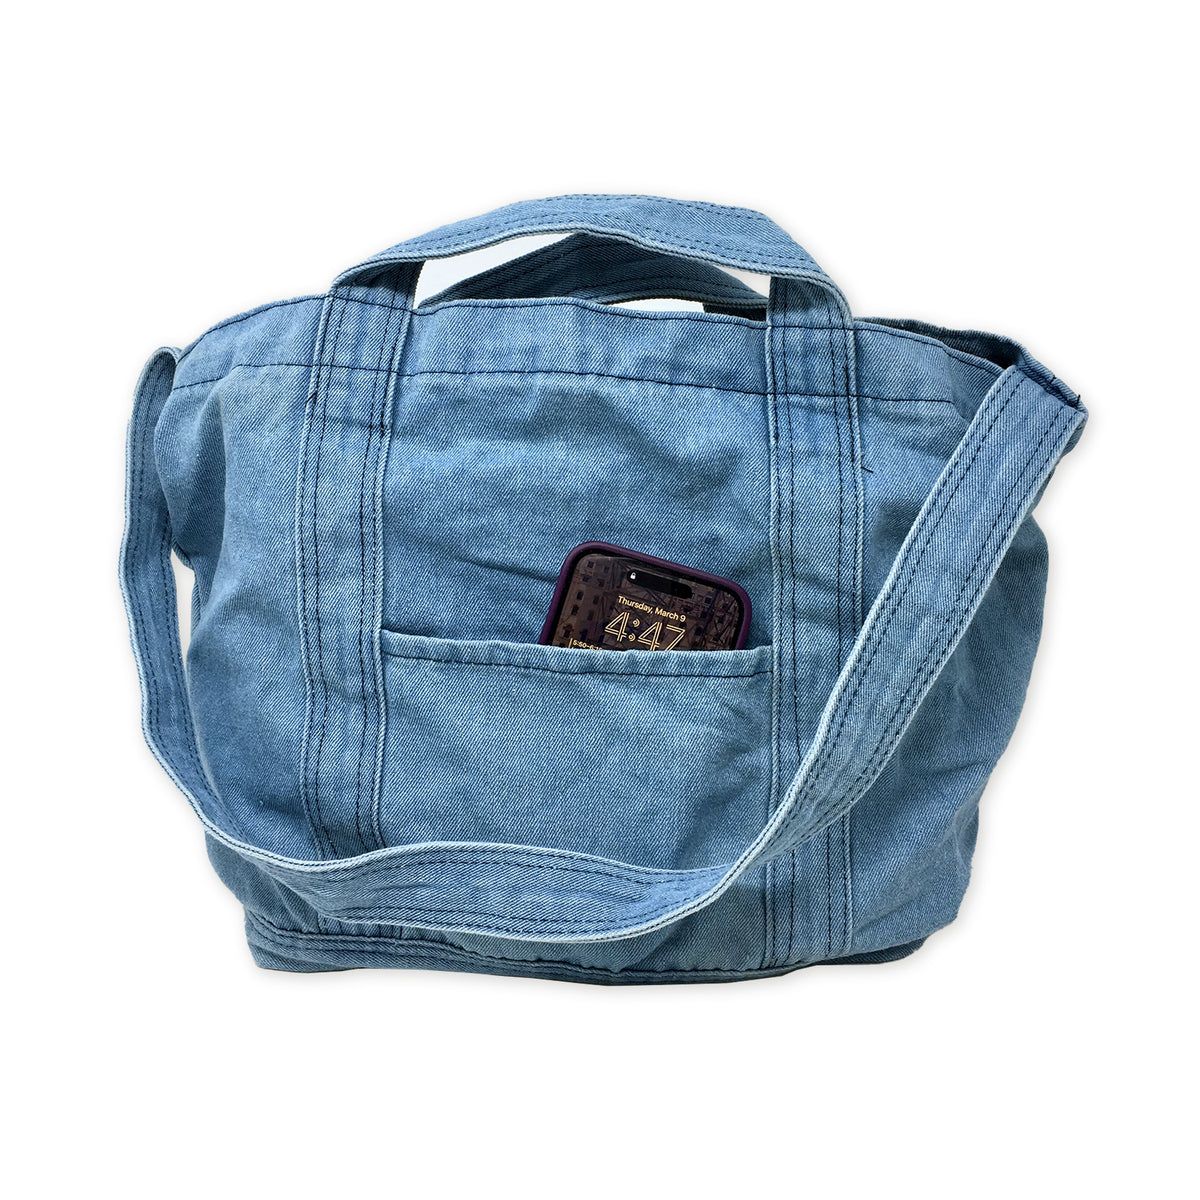 LEI Denim Blue Jean Crossbody Bag SMALL L.E.I. Cross Body Purse